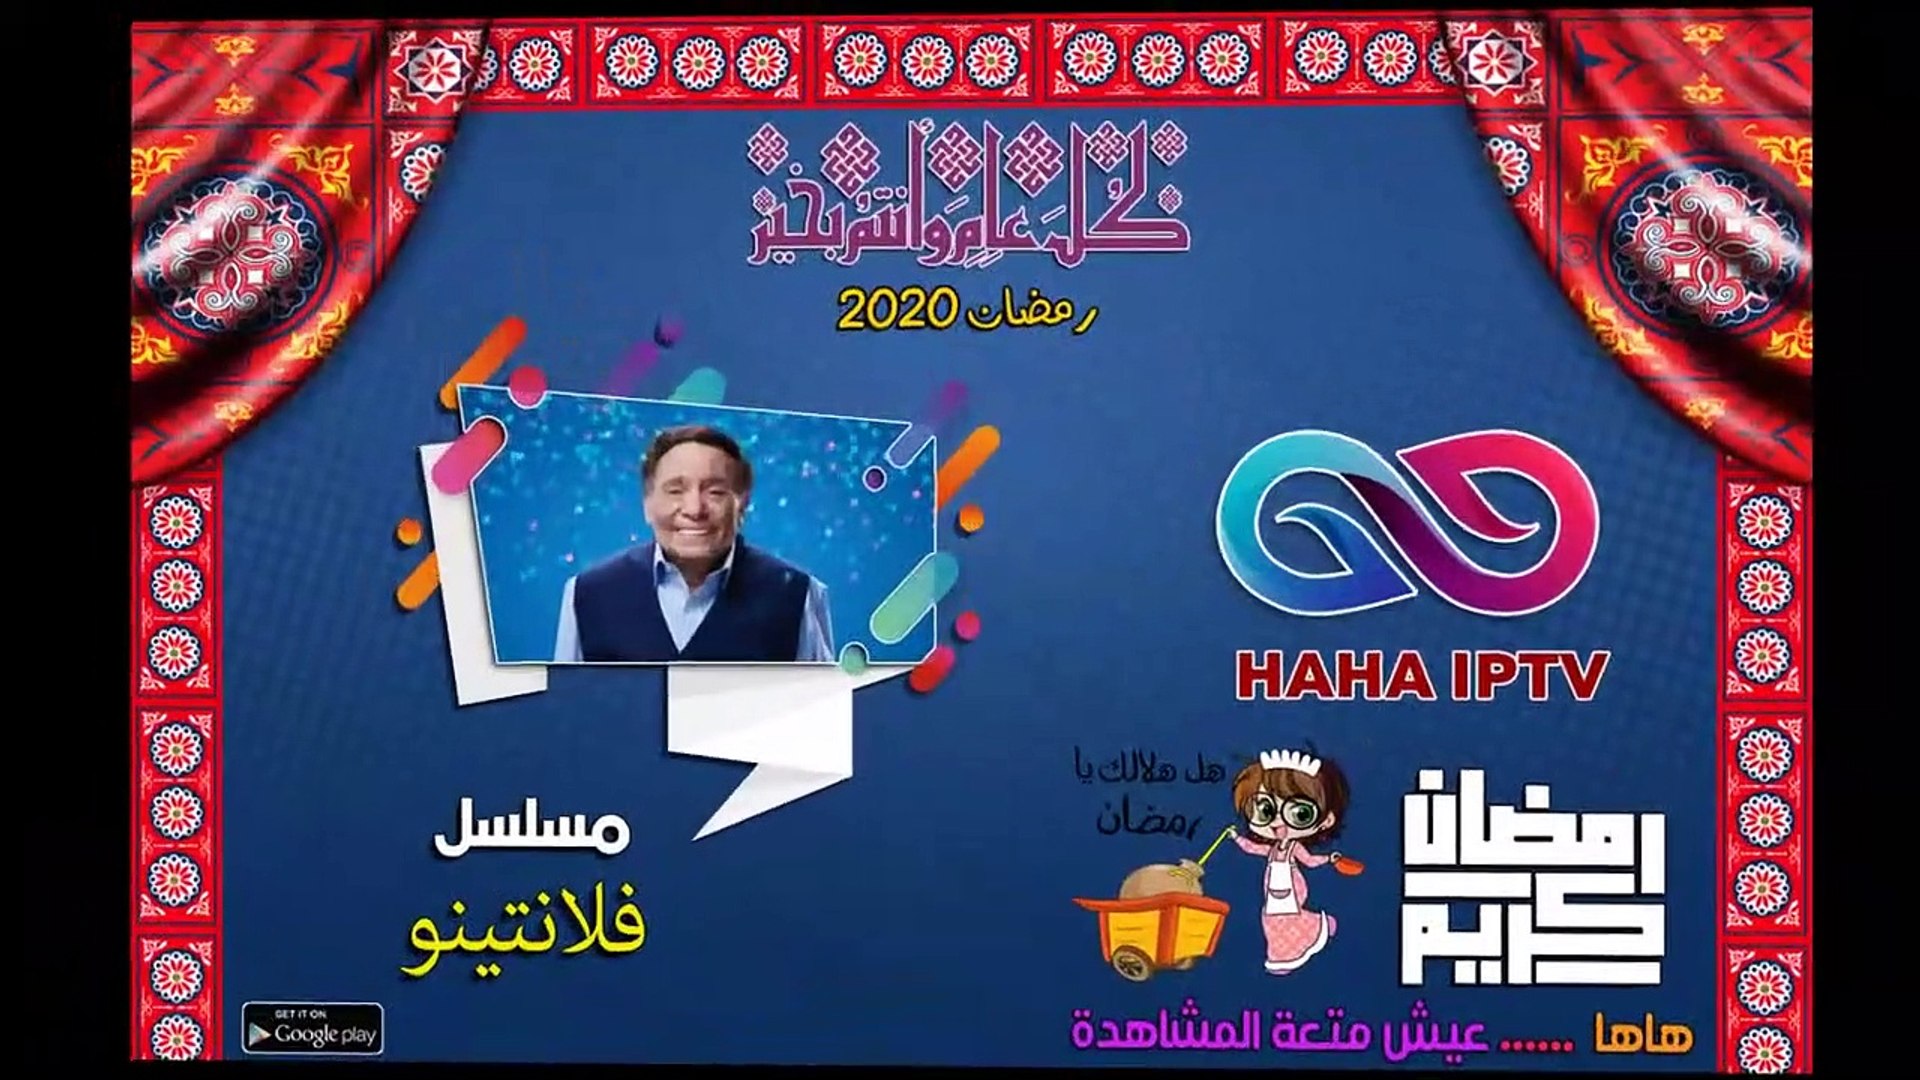 مسلسلات رمضان 2020 علي HAHA IPTV